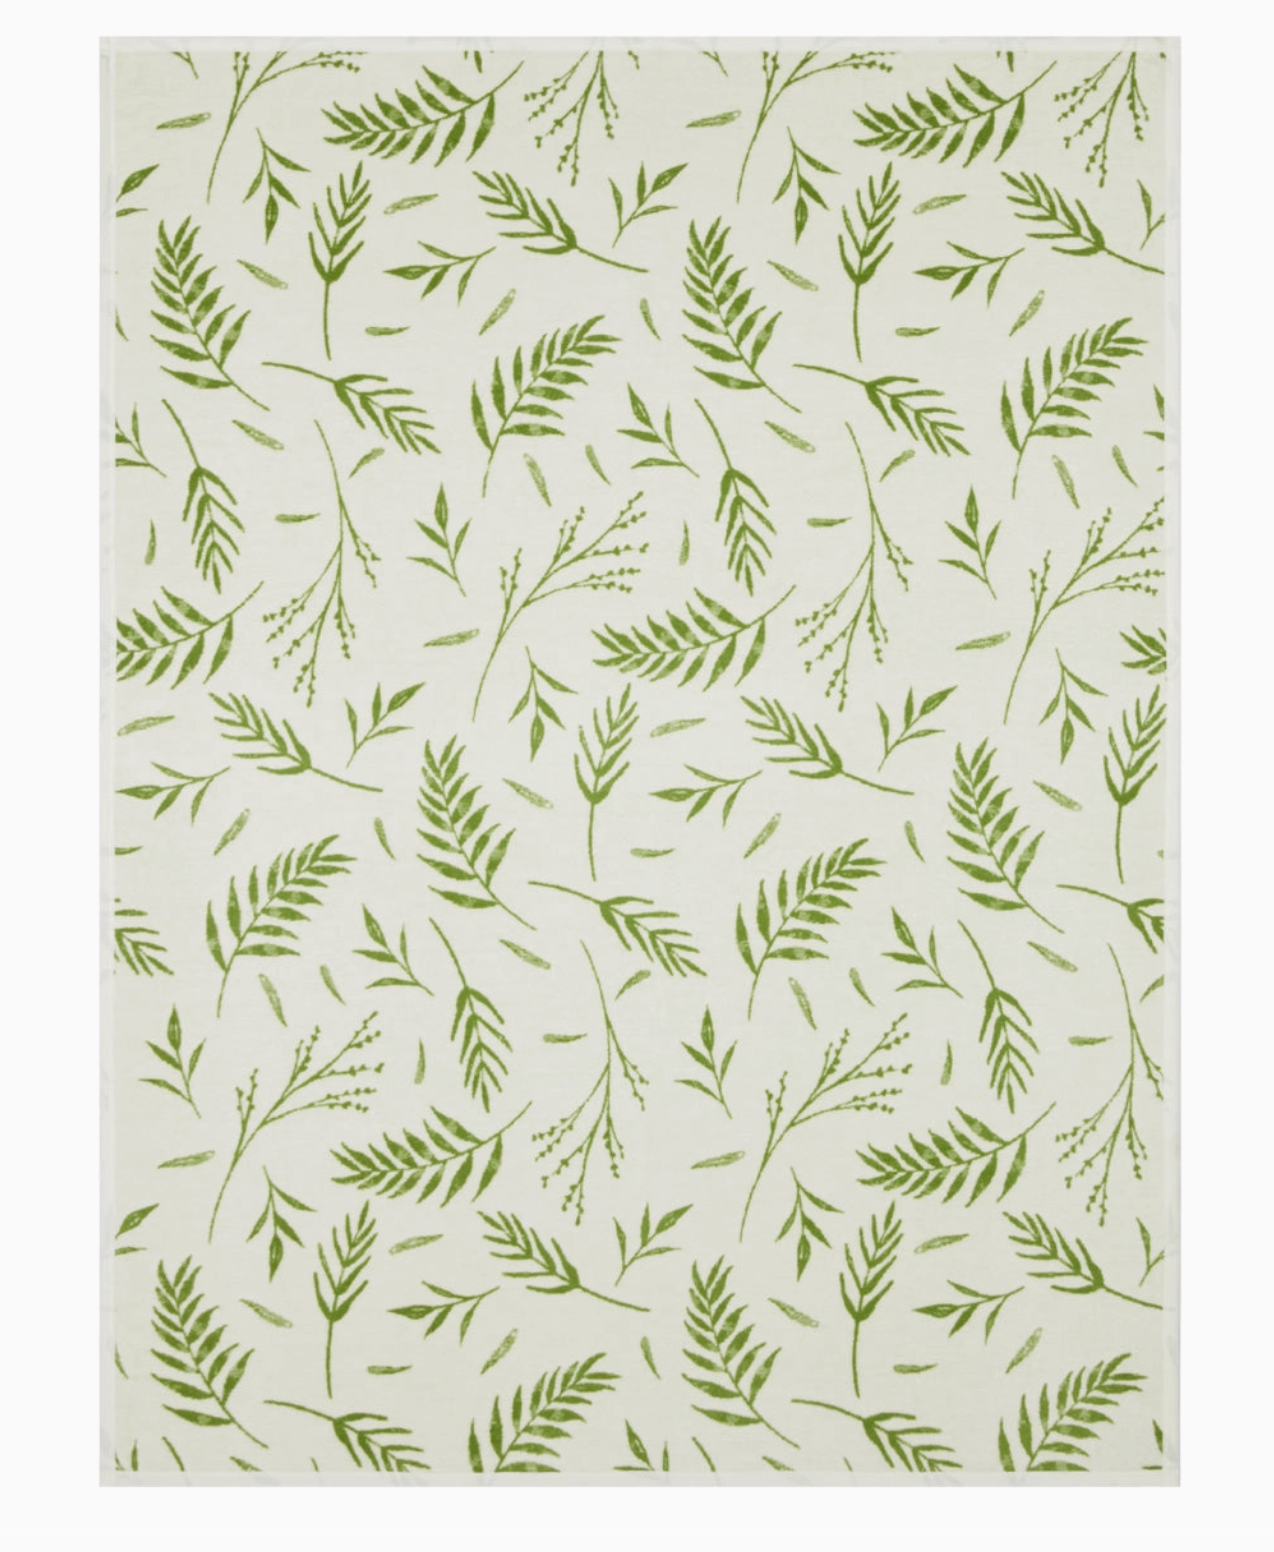 Olive Branch Blanket - Chappywrap